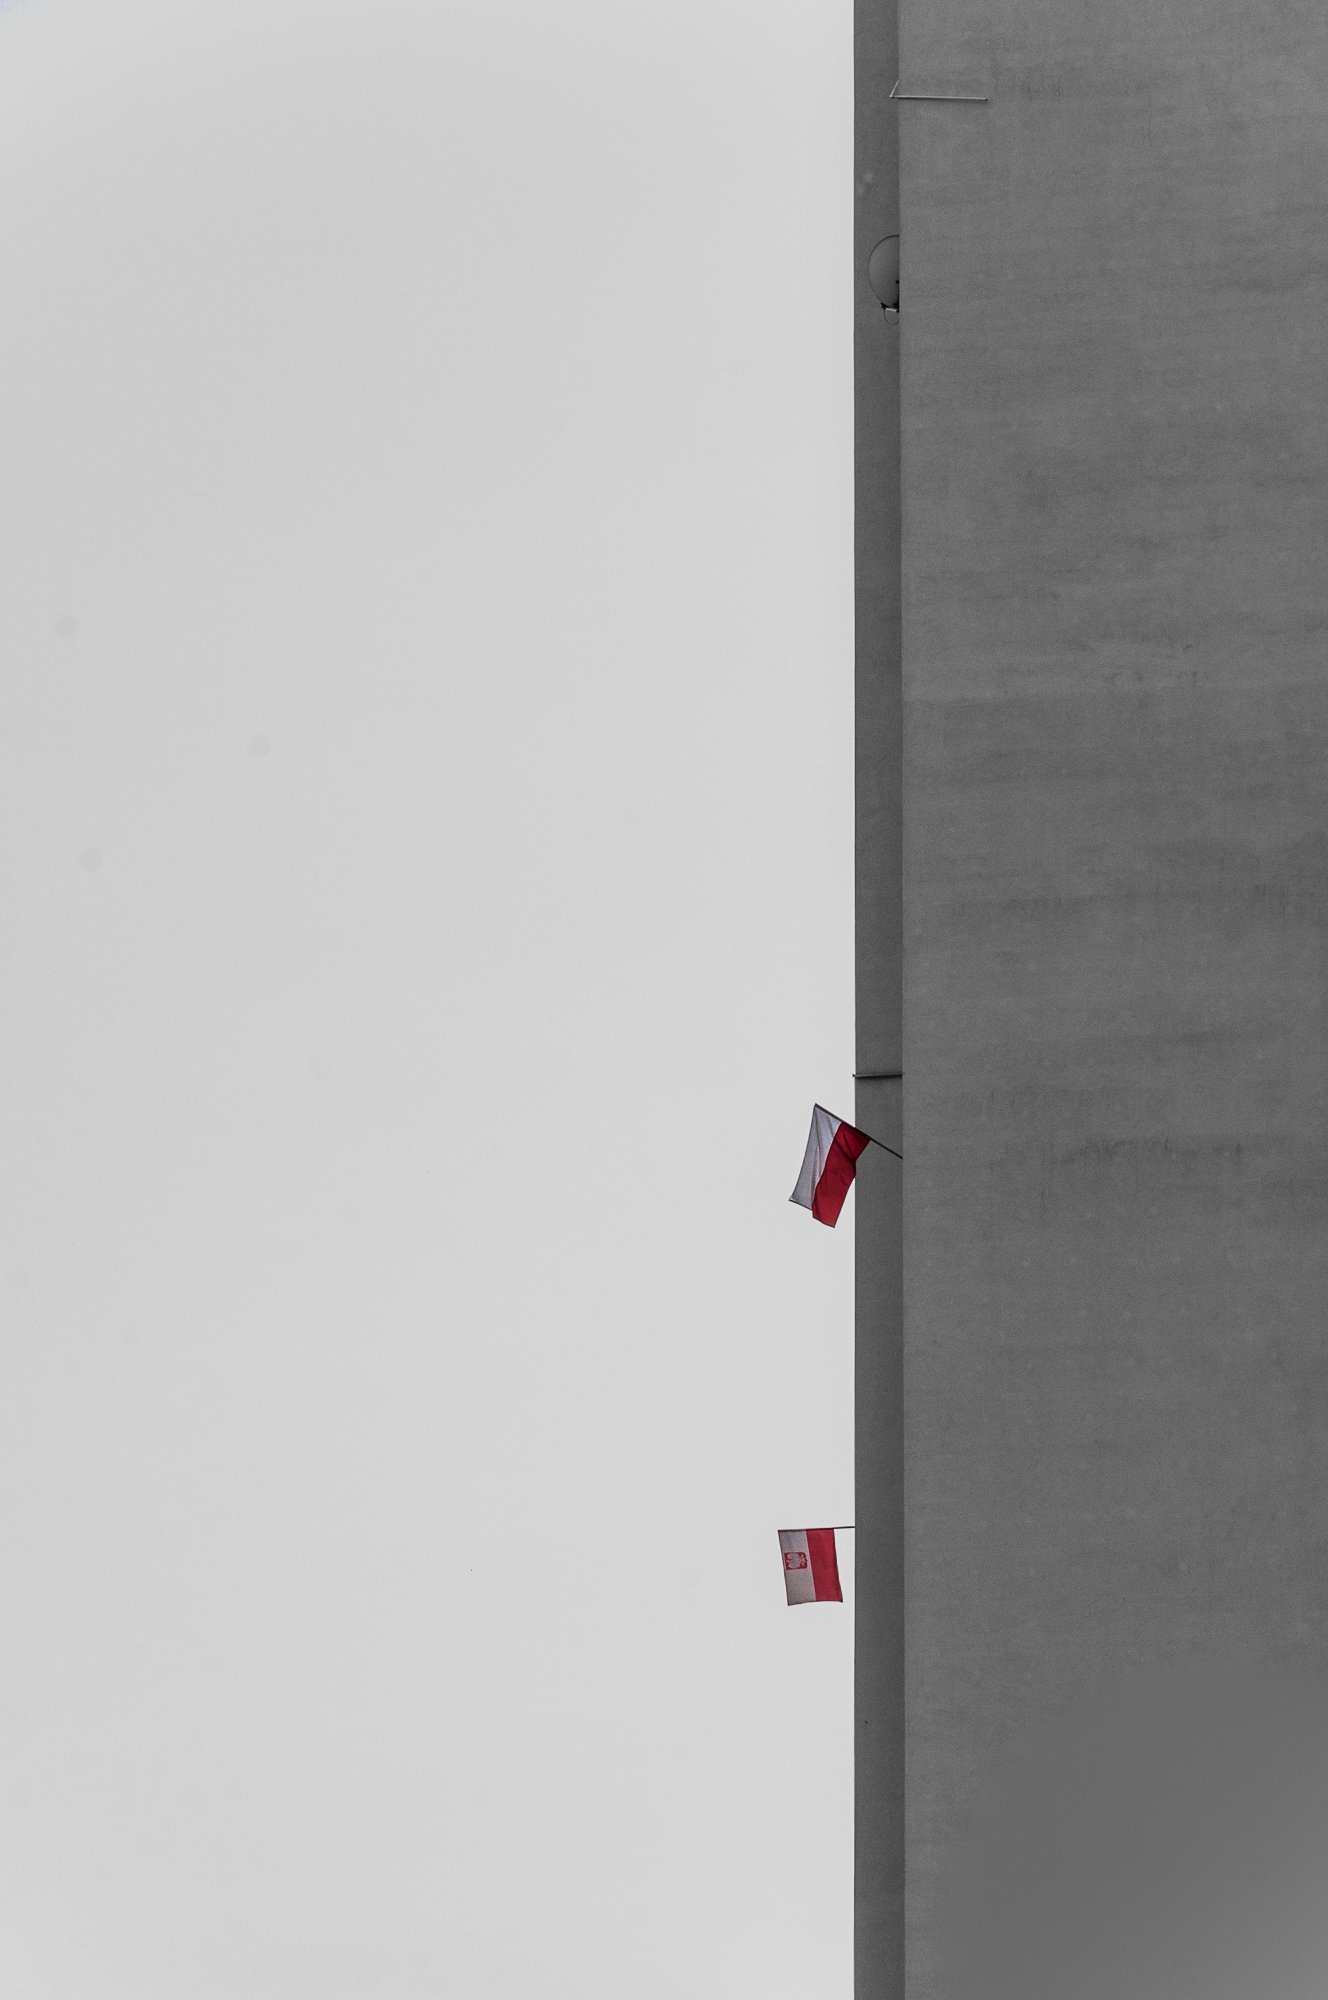 Adam Mazek Photography Warsaw (Warszawa) 2018. Post: "Pilsudski." Polish flag. Poland. Minimalism.